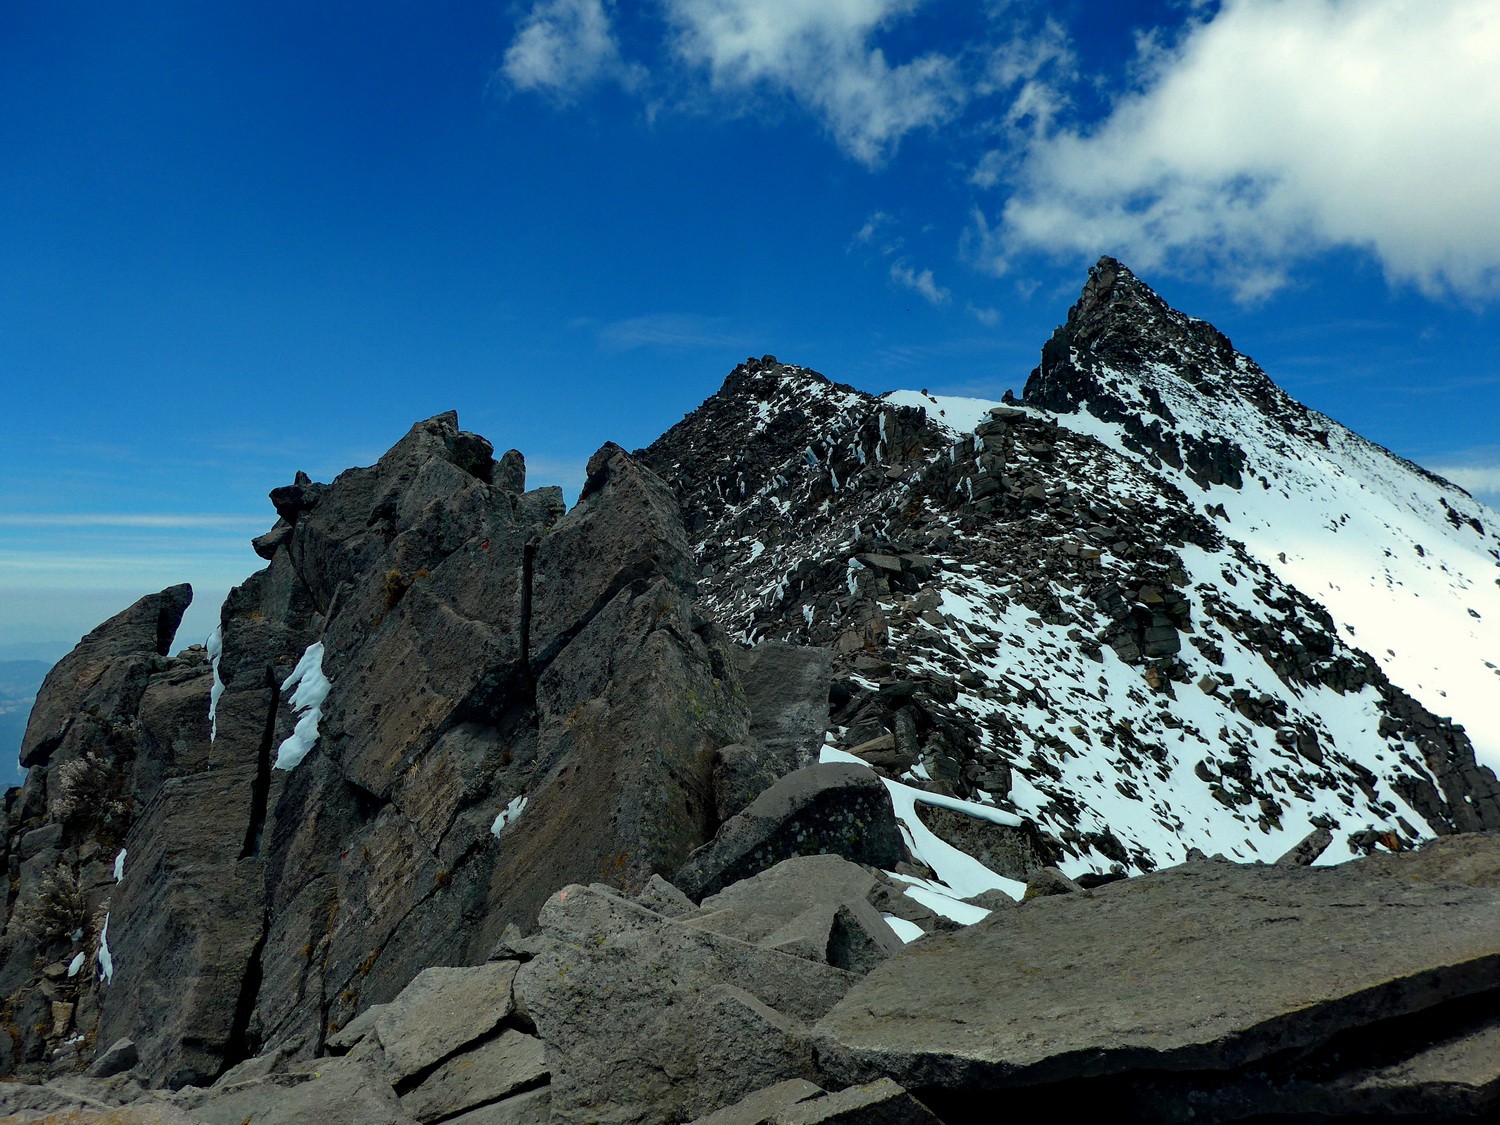 The main pinnacle Pico del Fraile with its eastern ridge